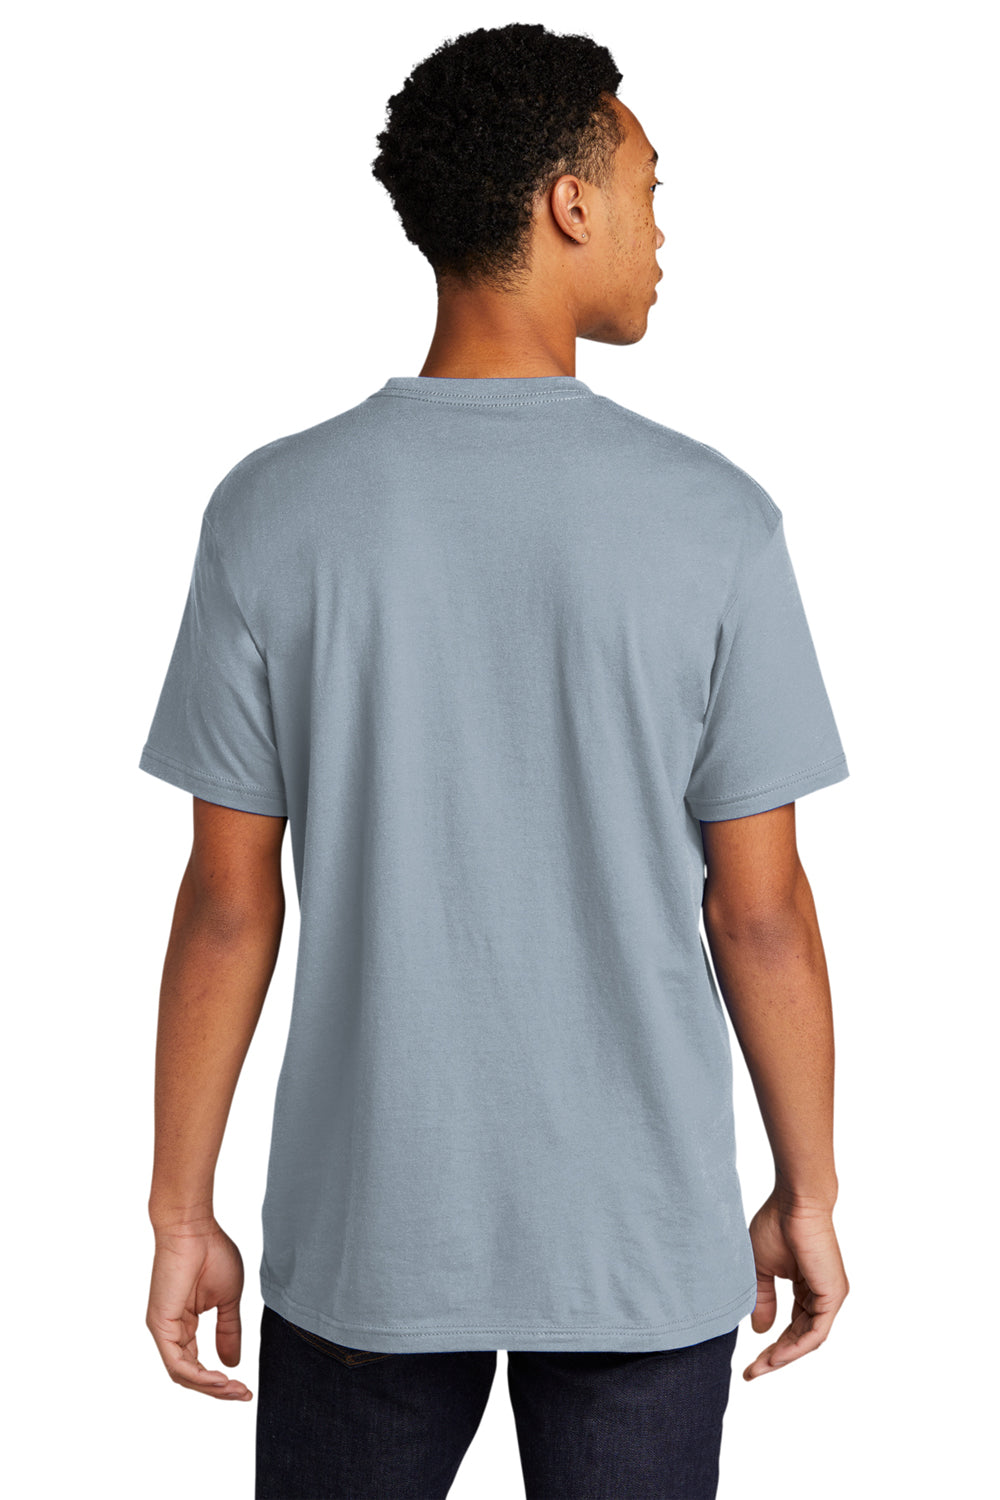 Next Level NL3600/3600 Mens Fine Jersey Short Sleeve Crewneck T-Shirt Stonewash Denim Blue Back